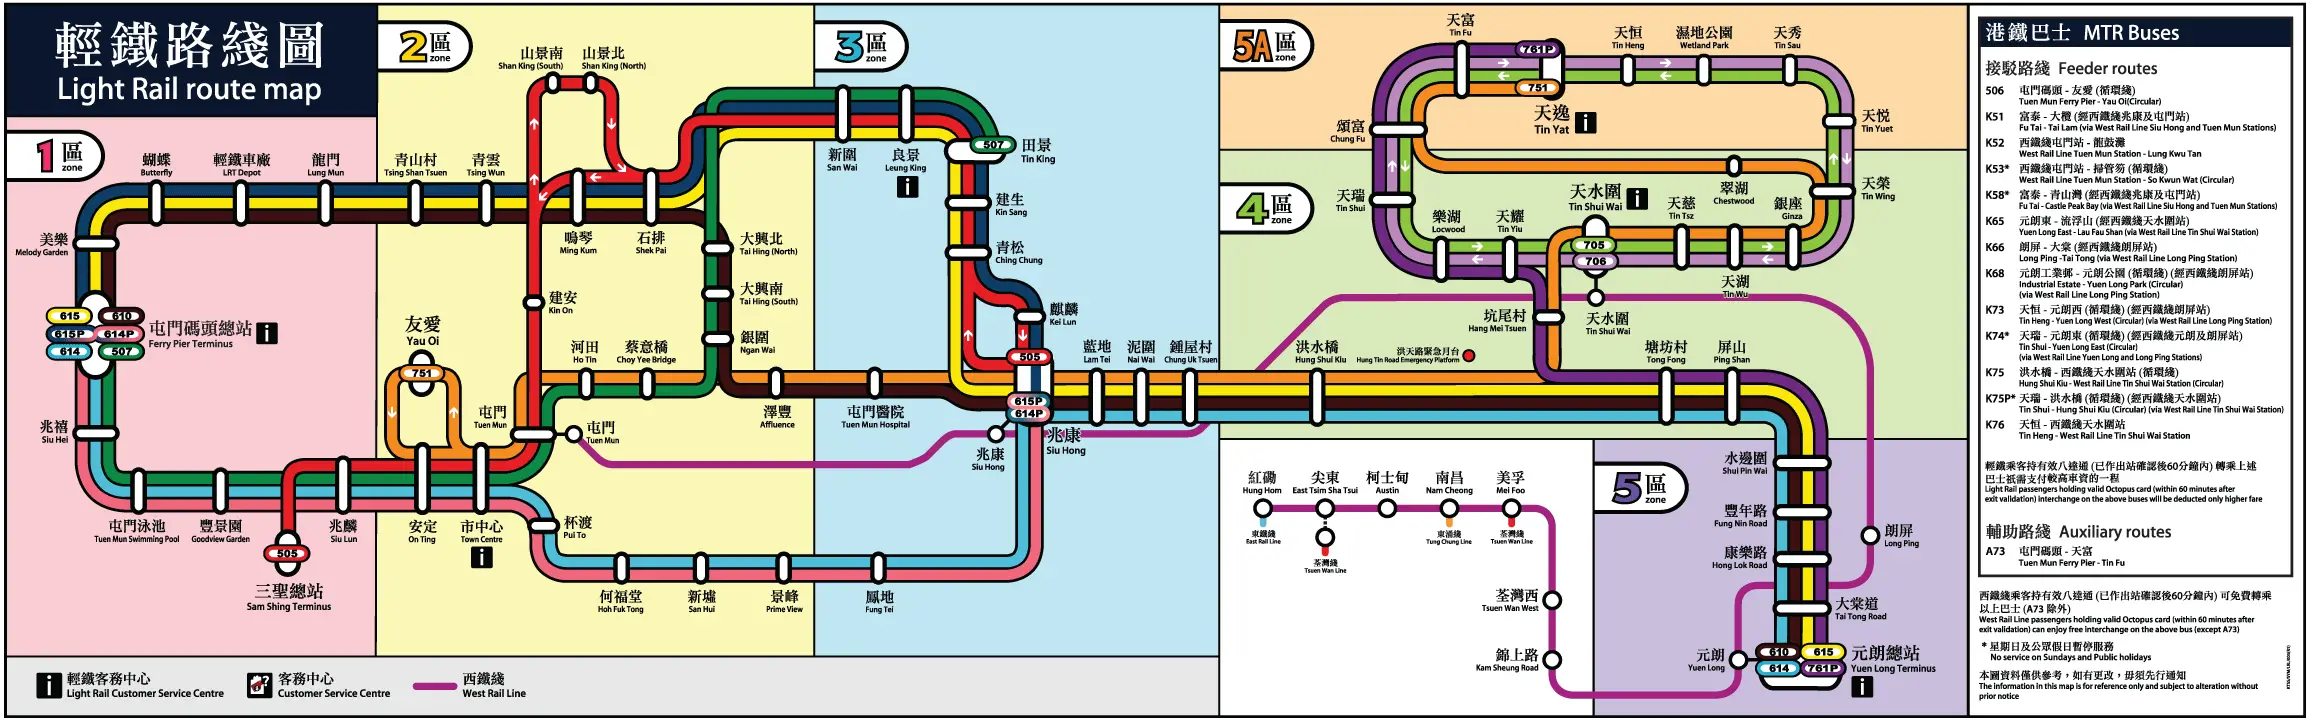 Hong Kong Tram Map (light Metro)